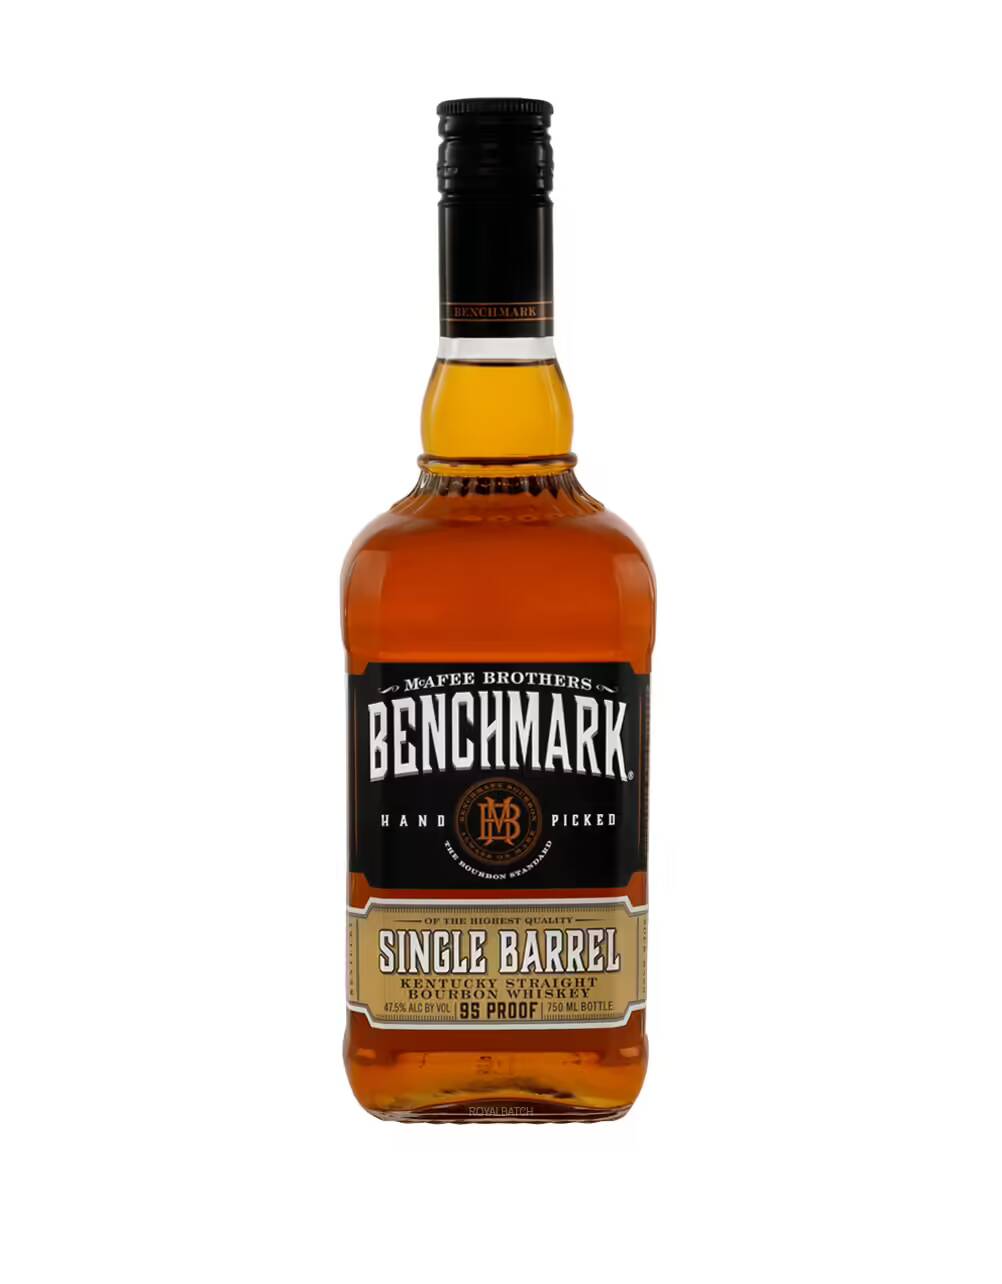 Benchmark Single Barrel Kentucky Straight Bourbon Whiskey